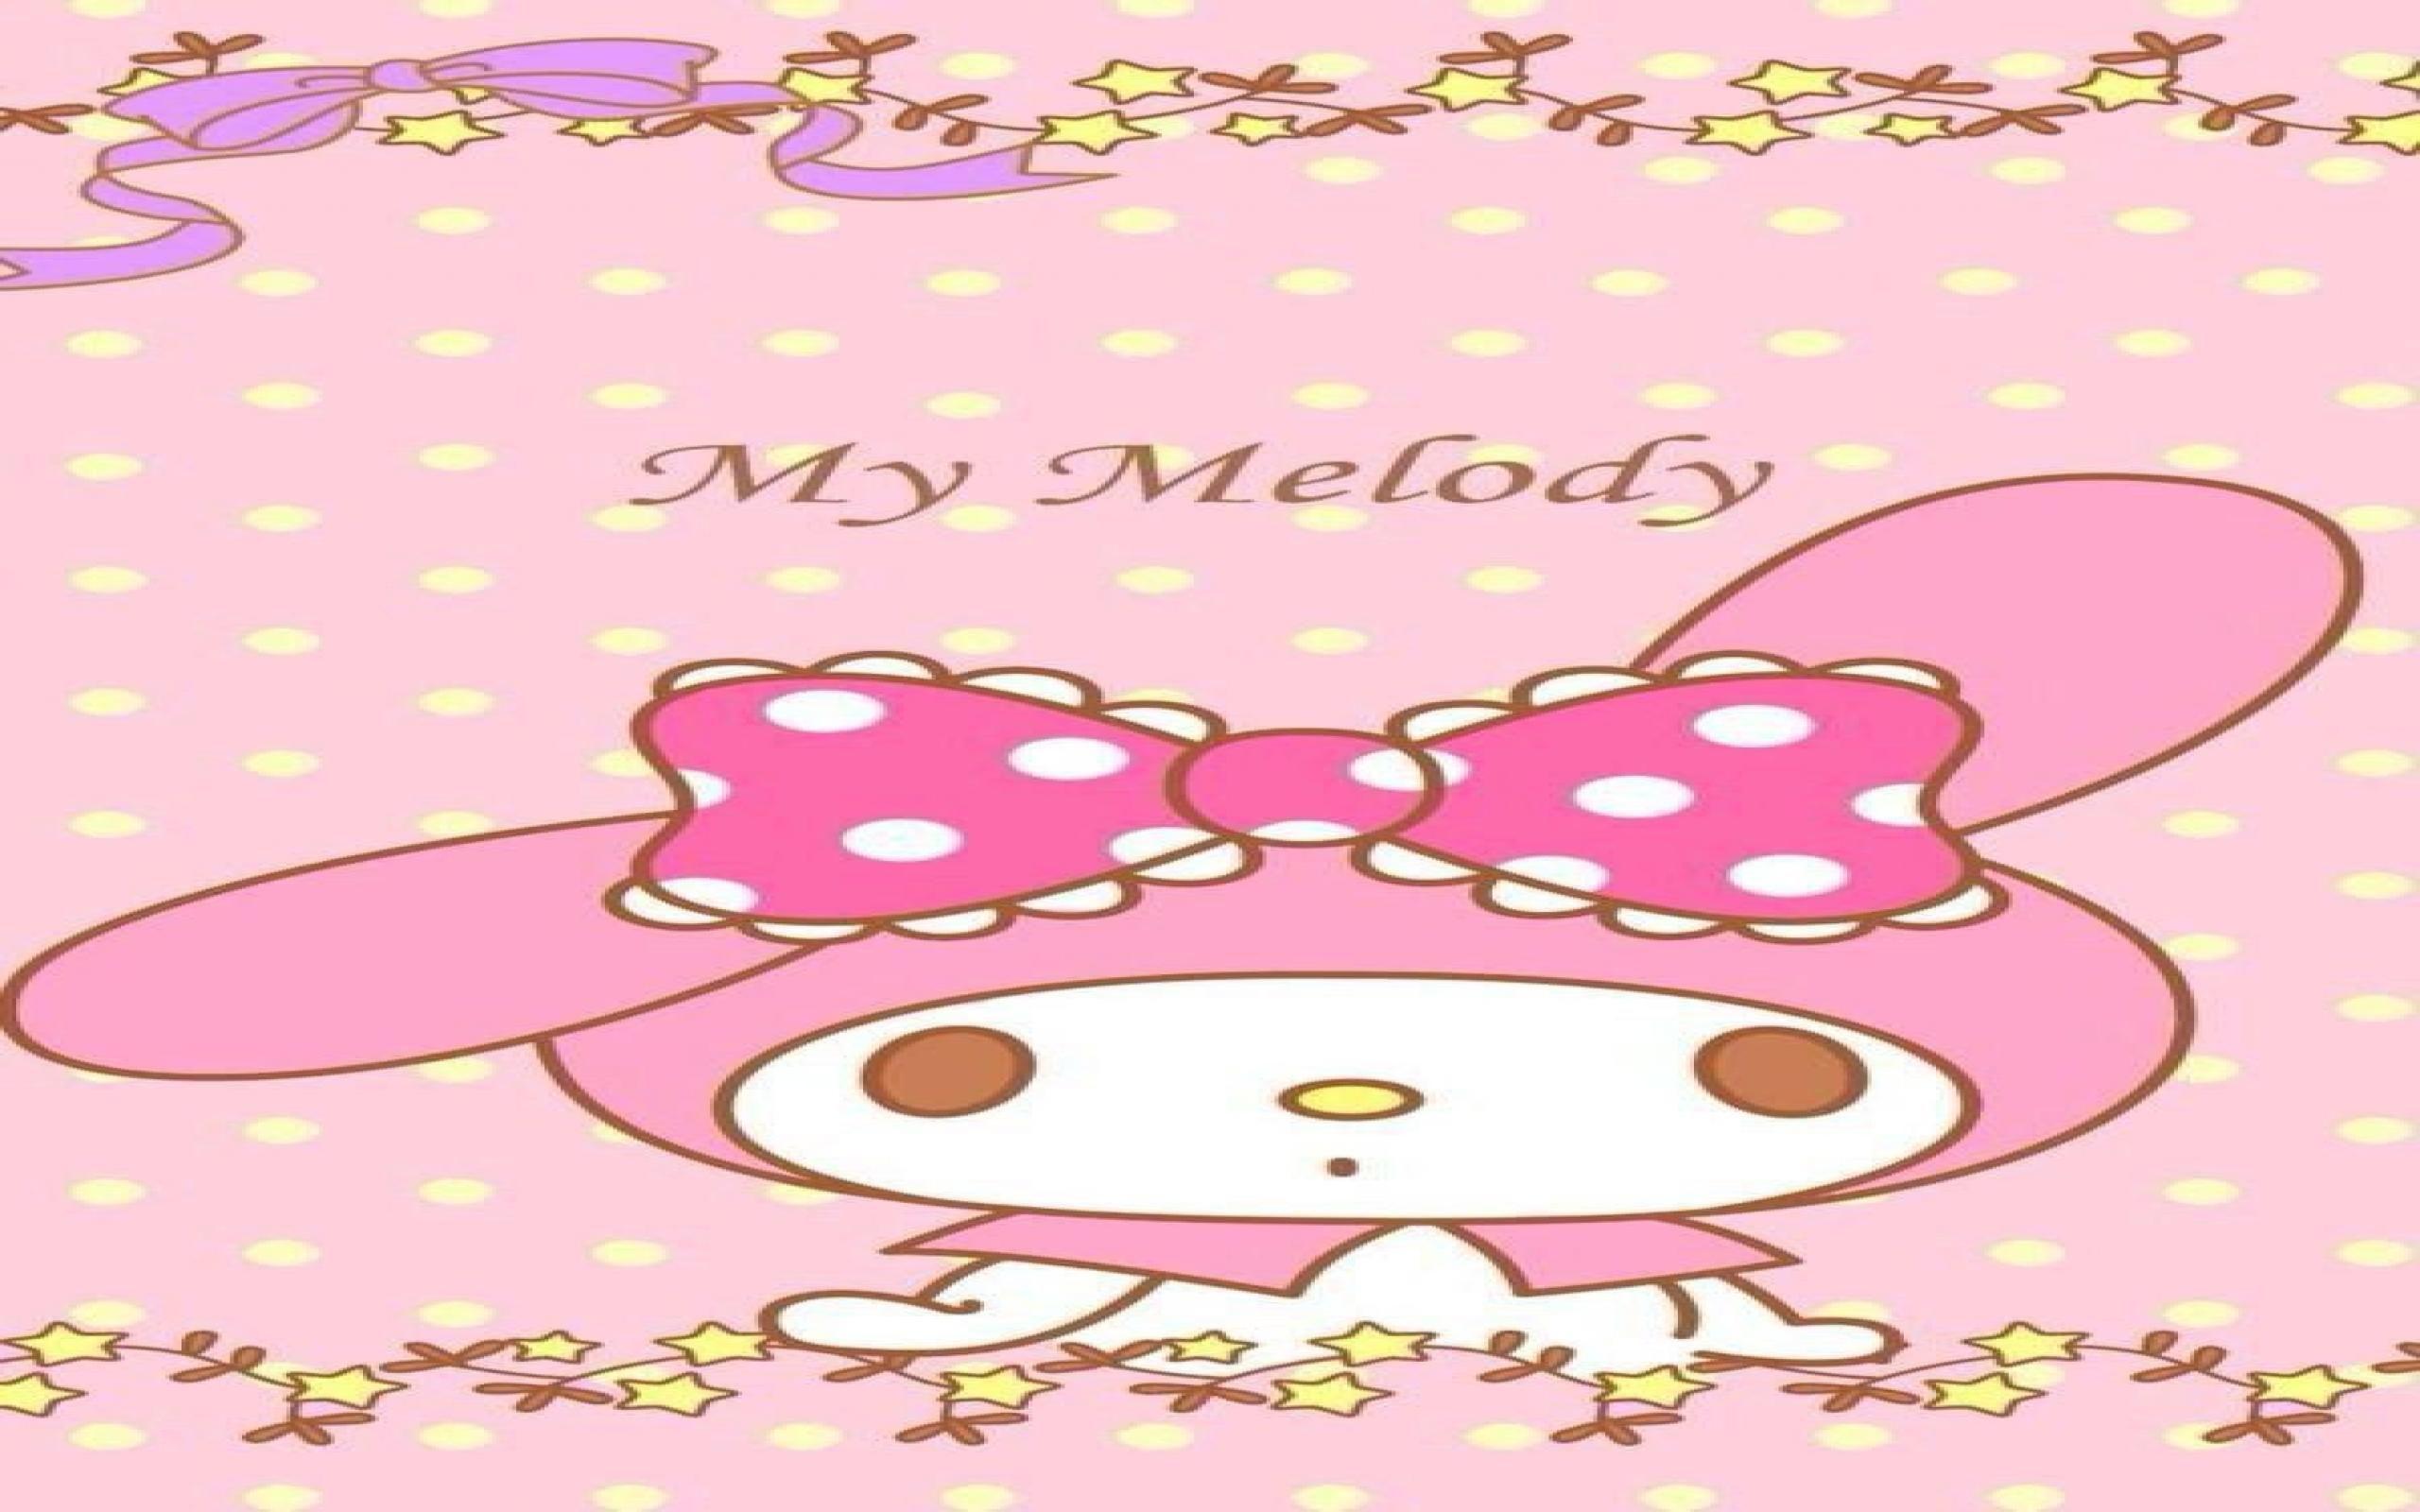 My Melody Wallpaper XQWLJ4 (600x1066 px)